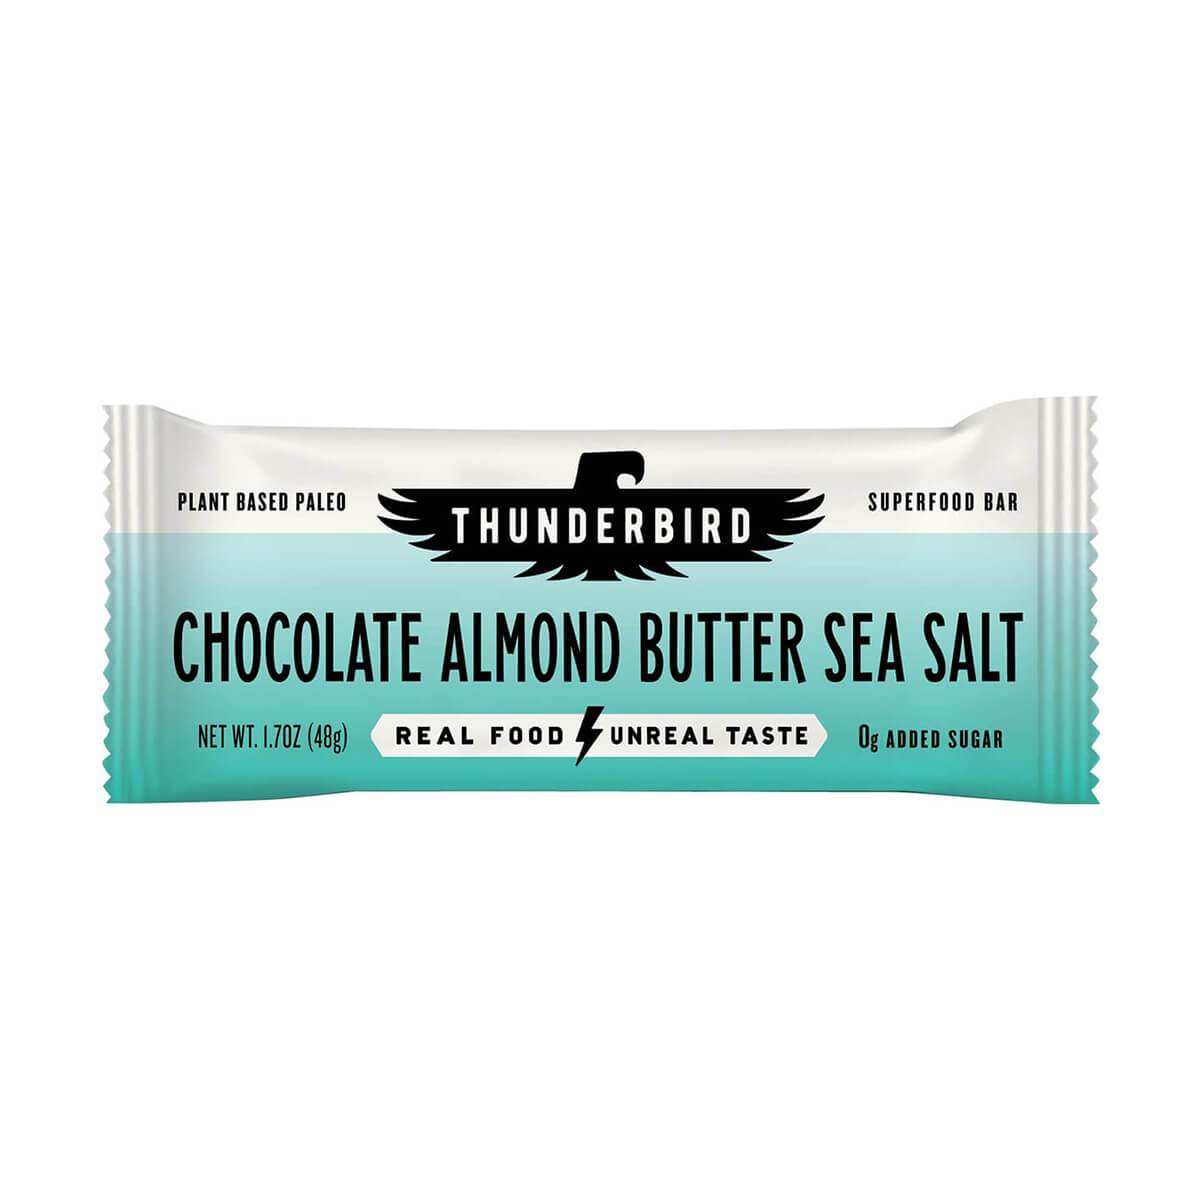 Chocolate Almond Butter Sea Salt - Box of 12 Bars